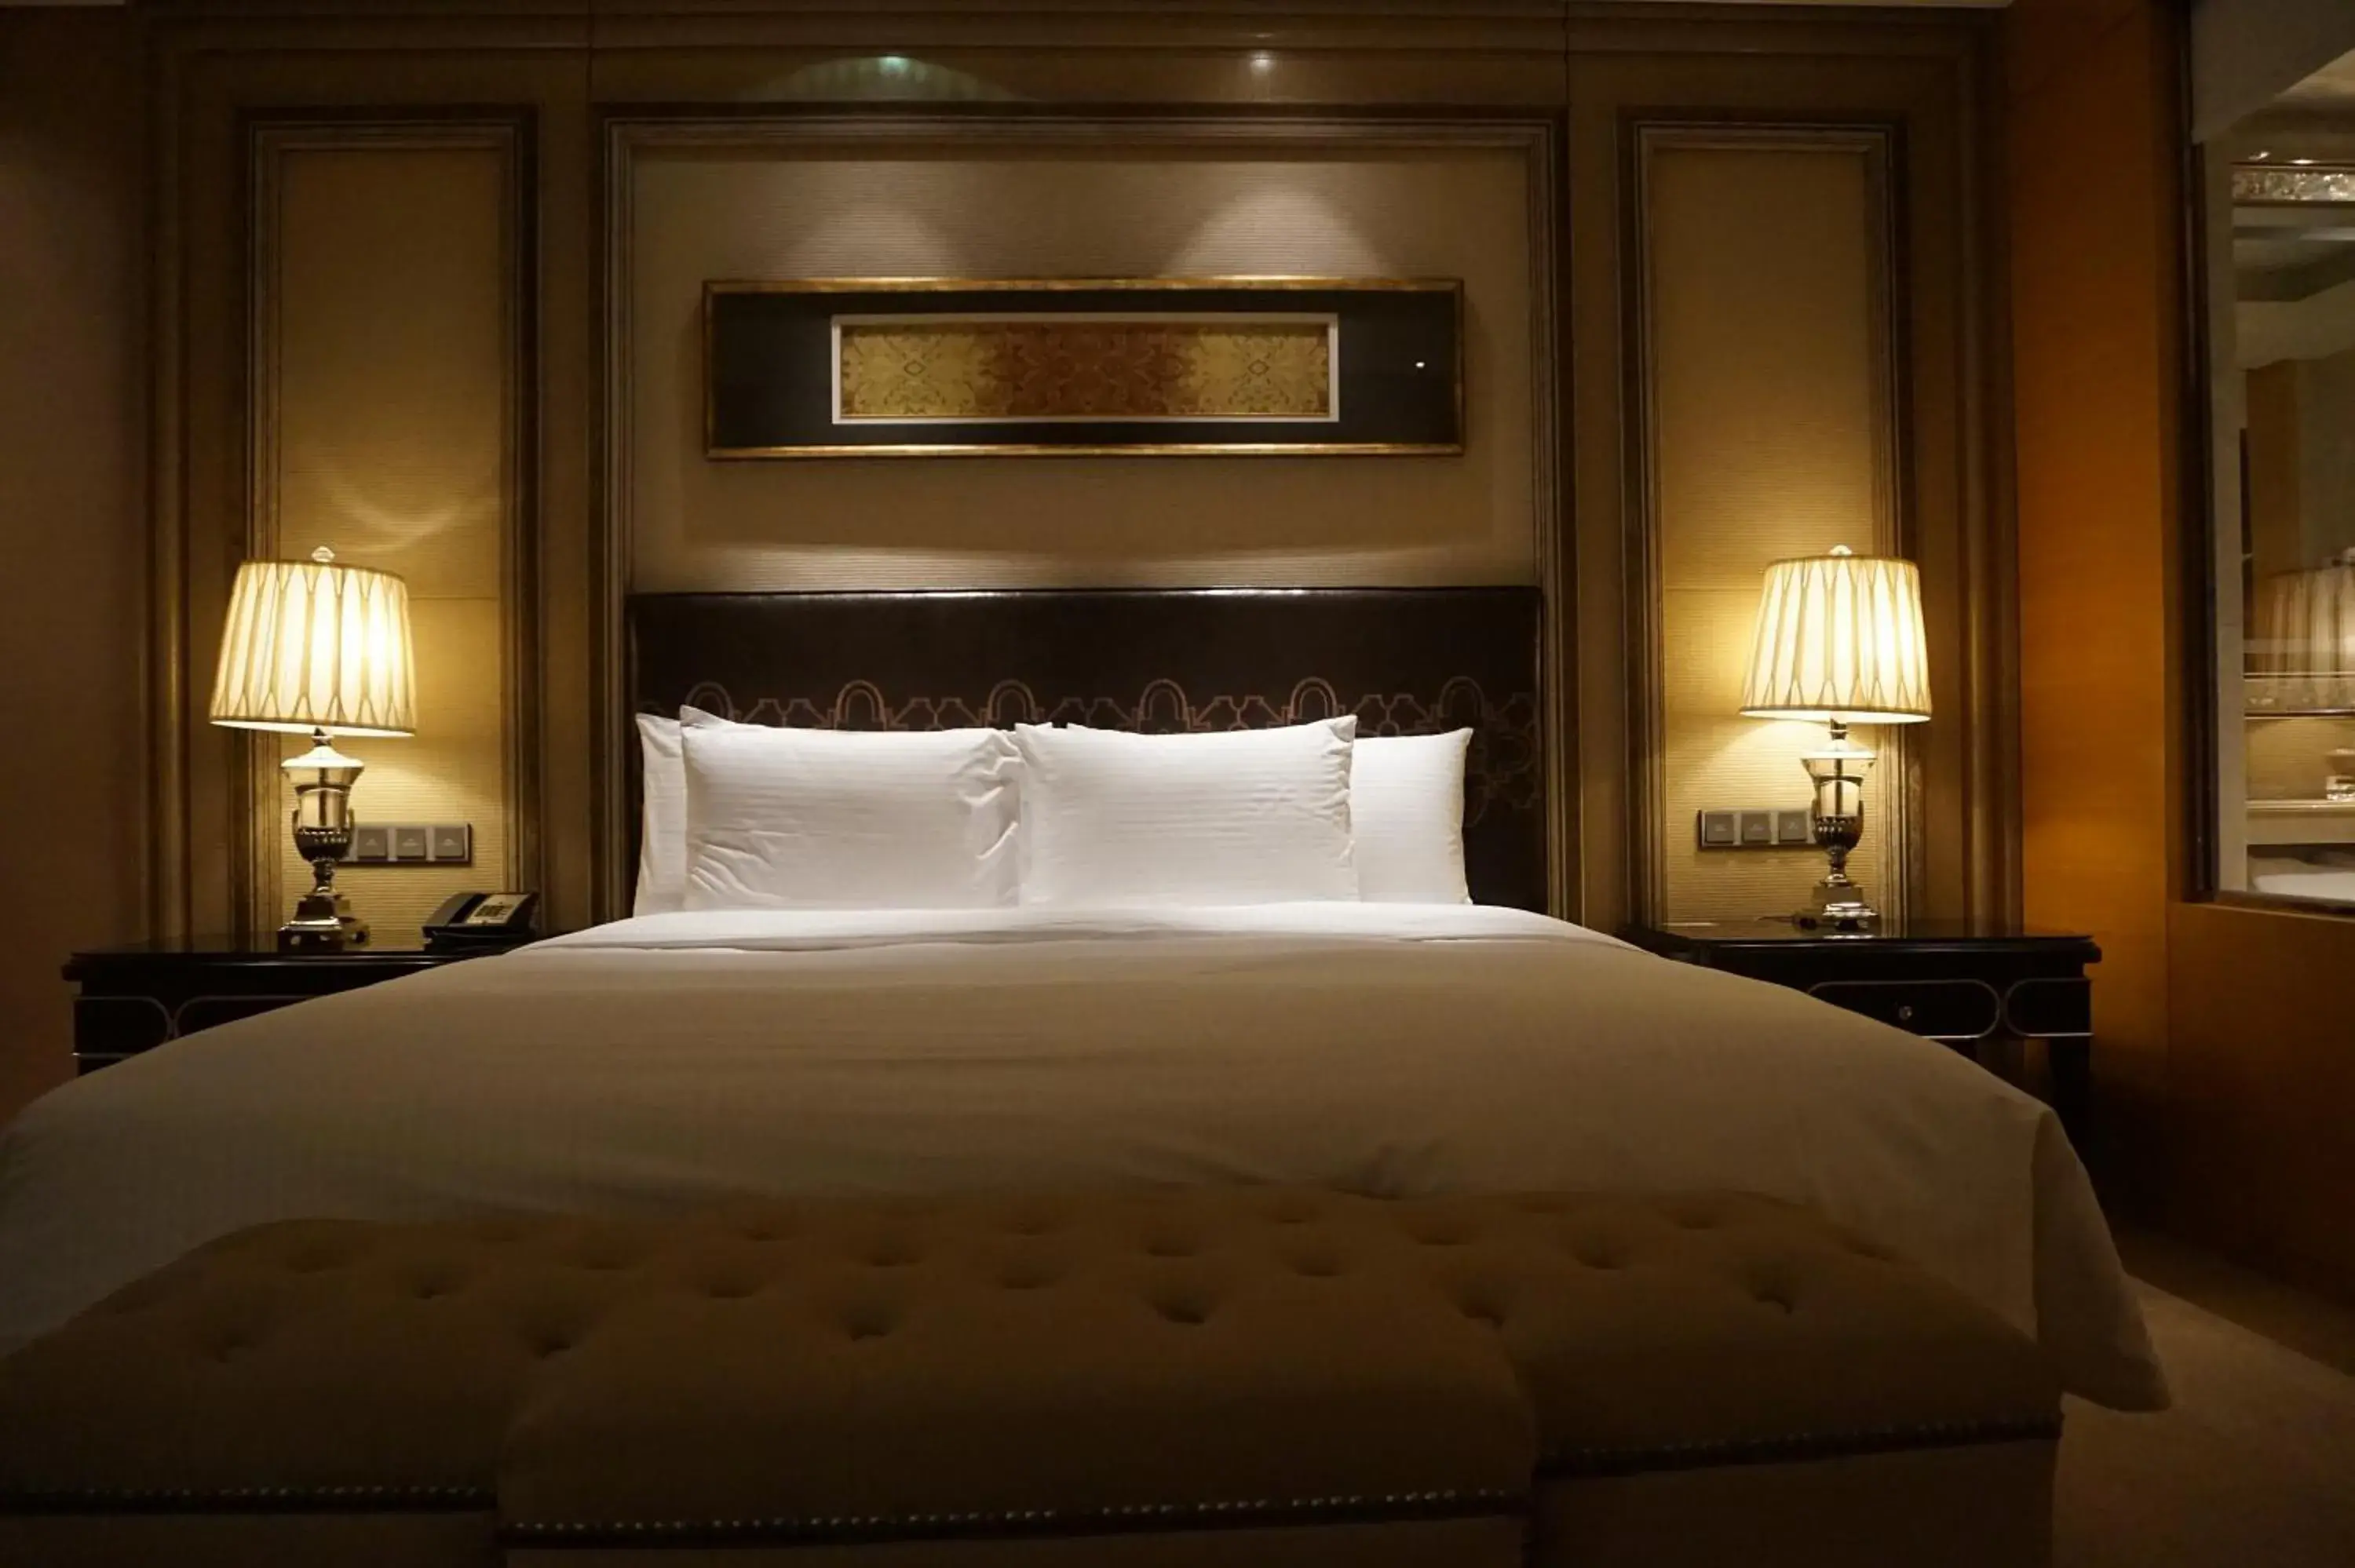 Bed in Wanda Realm Harbin Hotel